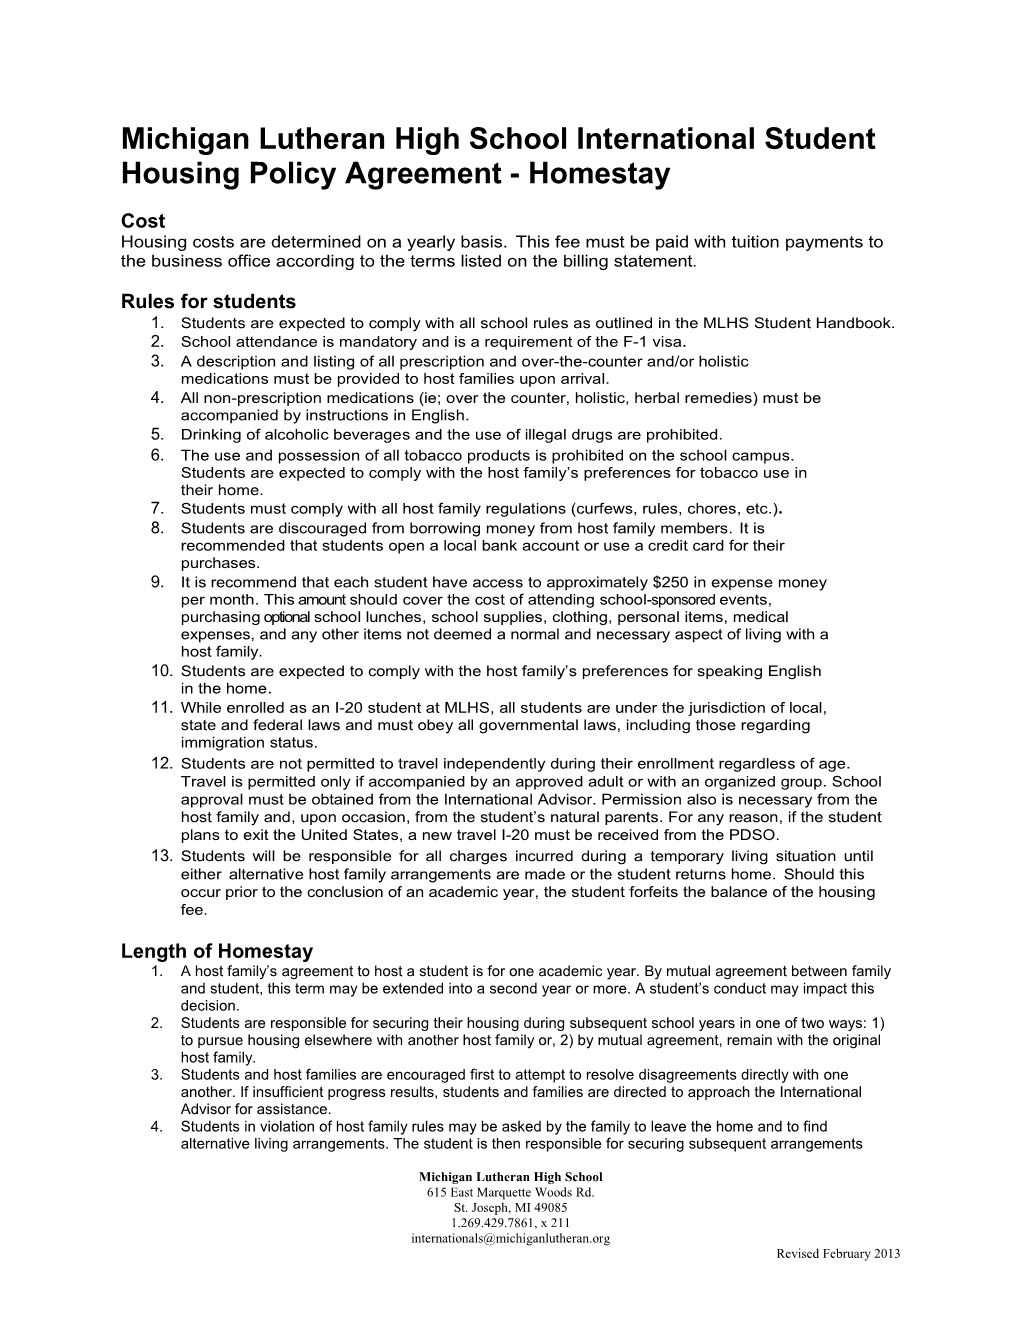 Michigan Lutheran High School International Student Housing Policy Agreement - Homestay